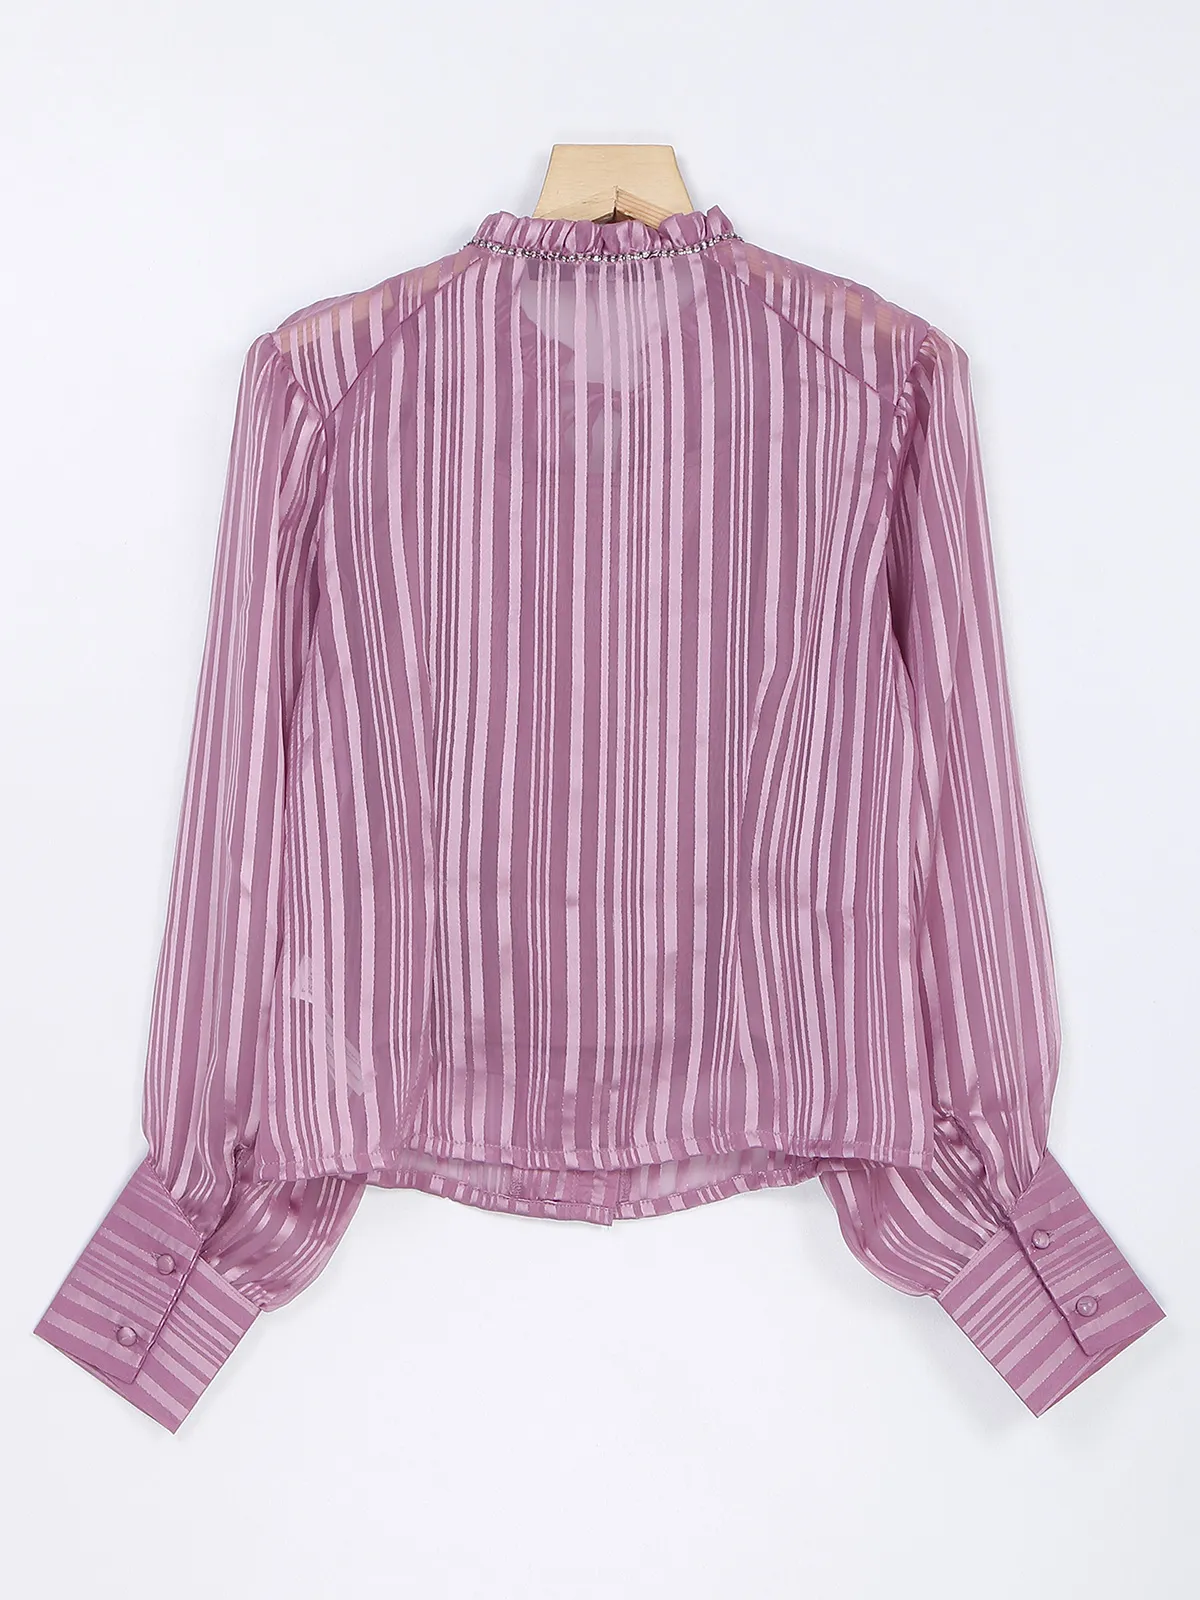 Mauve pink stripe chiffon top